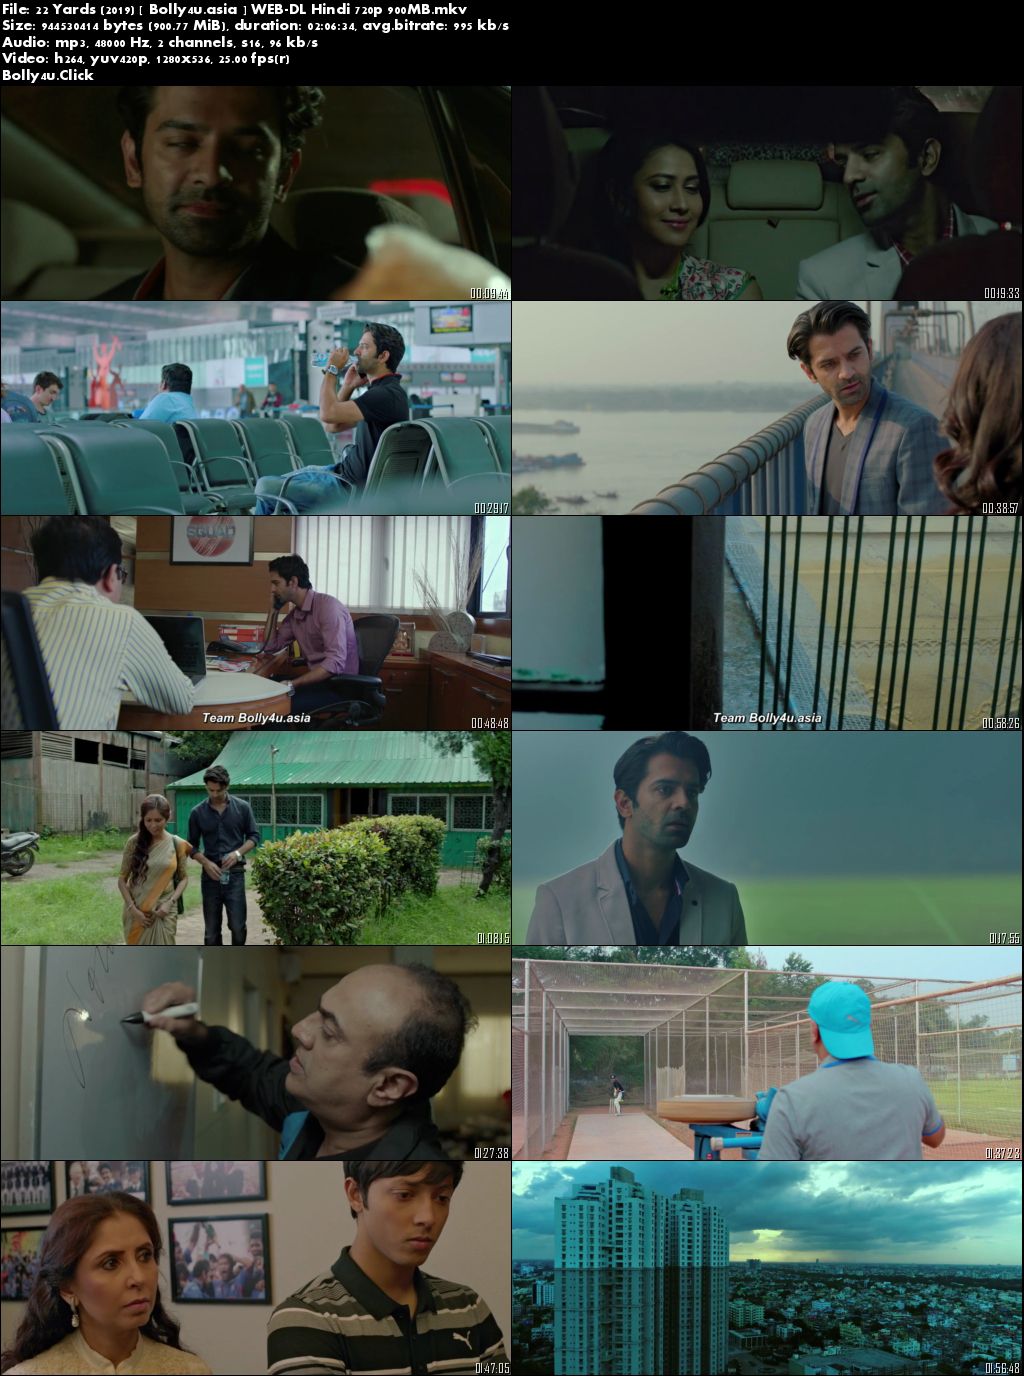 22 Yards 2019 WEB-DL 900Mb Full Hindi Movie Download 720p